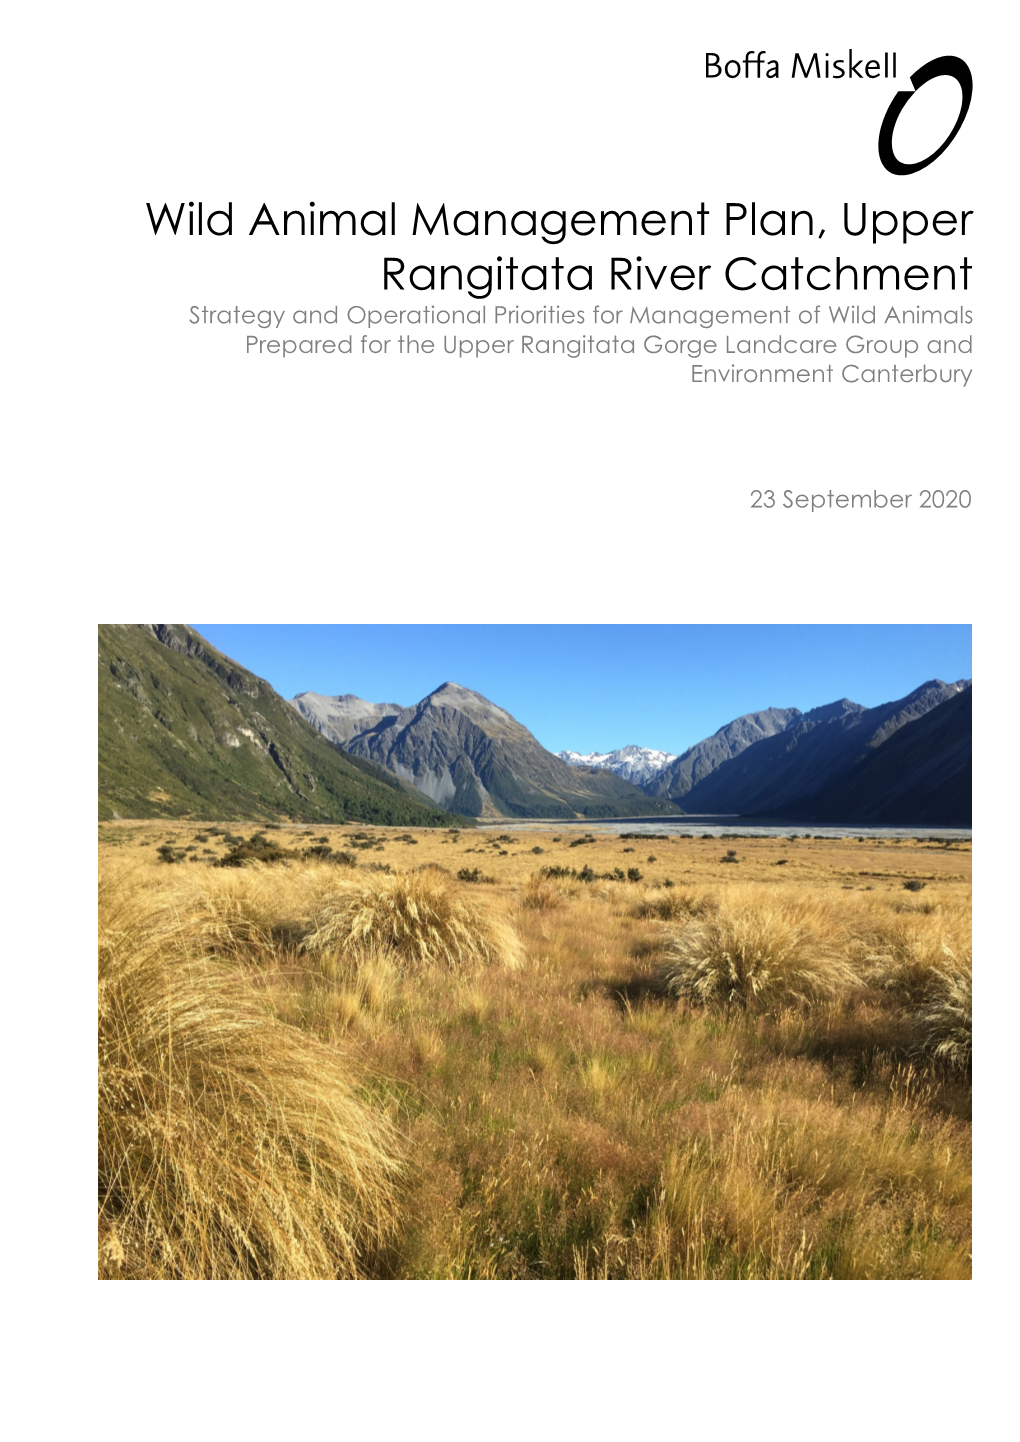 Wild Animal Management Plan, Upper Rangitata River Catchment